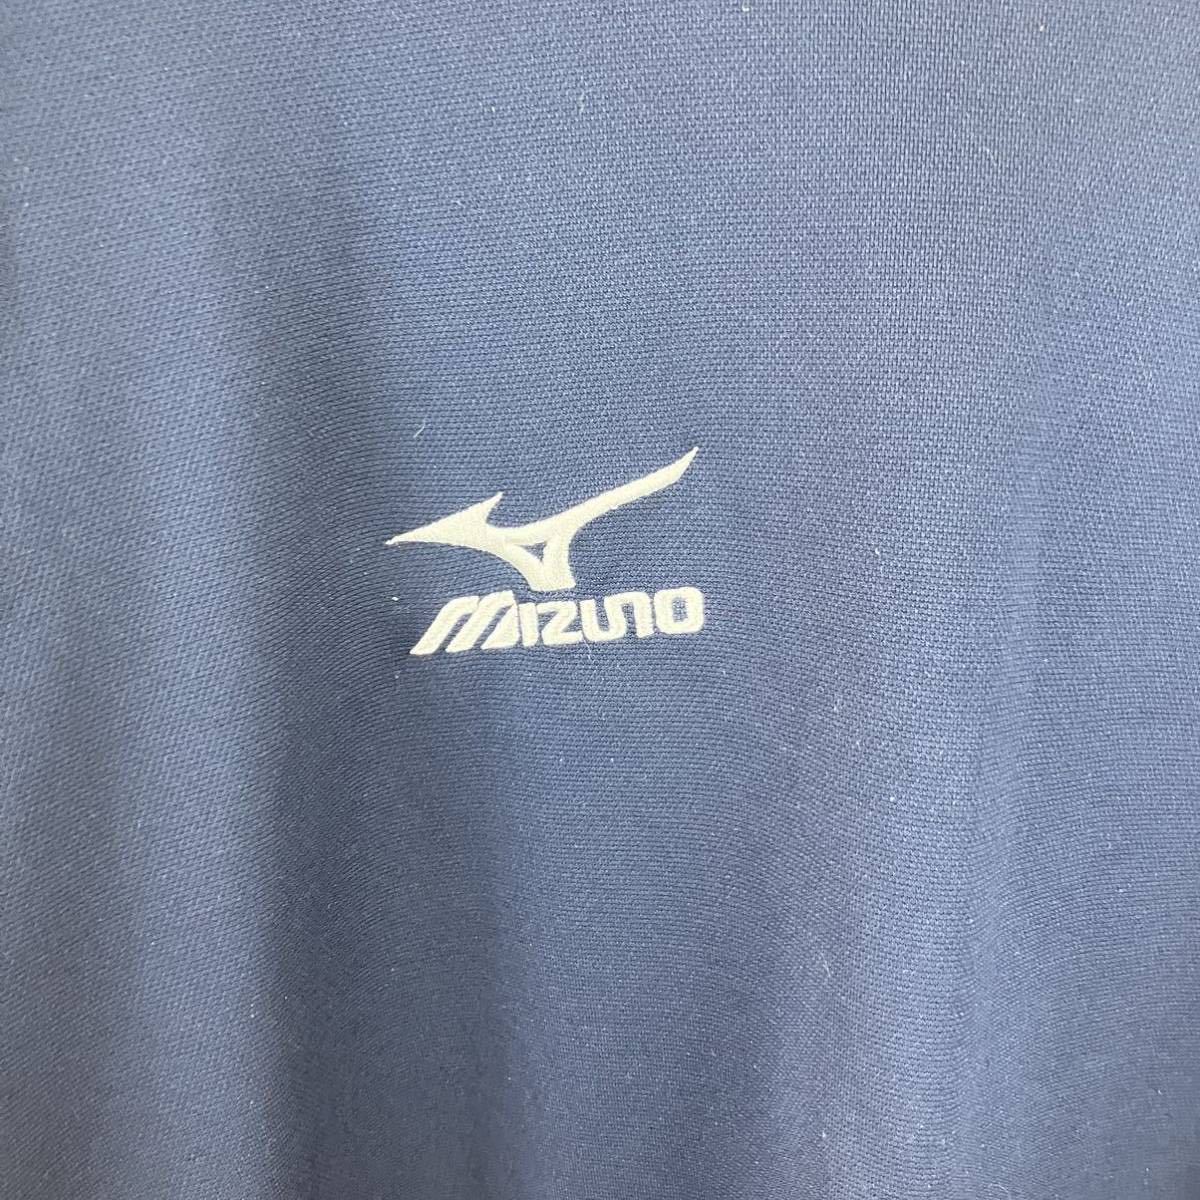 MIZUNO ミズノ メンズ 長袖Tシャツ 吸汗速乾 丸首 スポーツウェア トレーニングウェア ランニングウェア シンプル ワンポイント Lサイズ